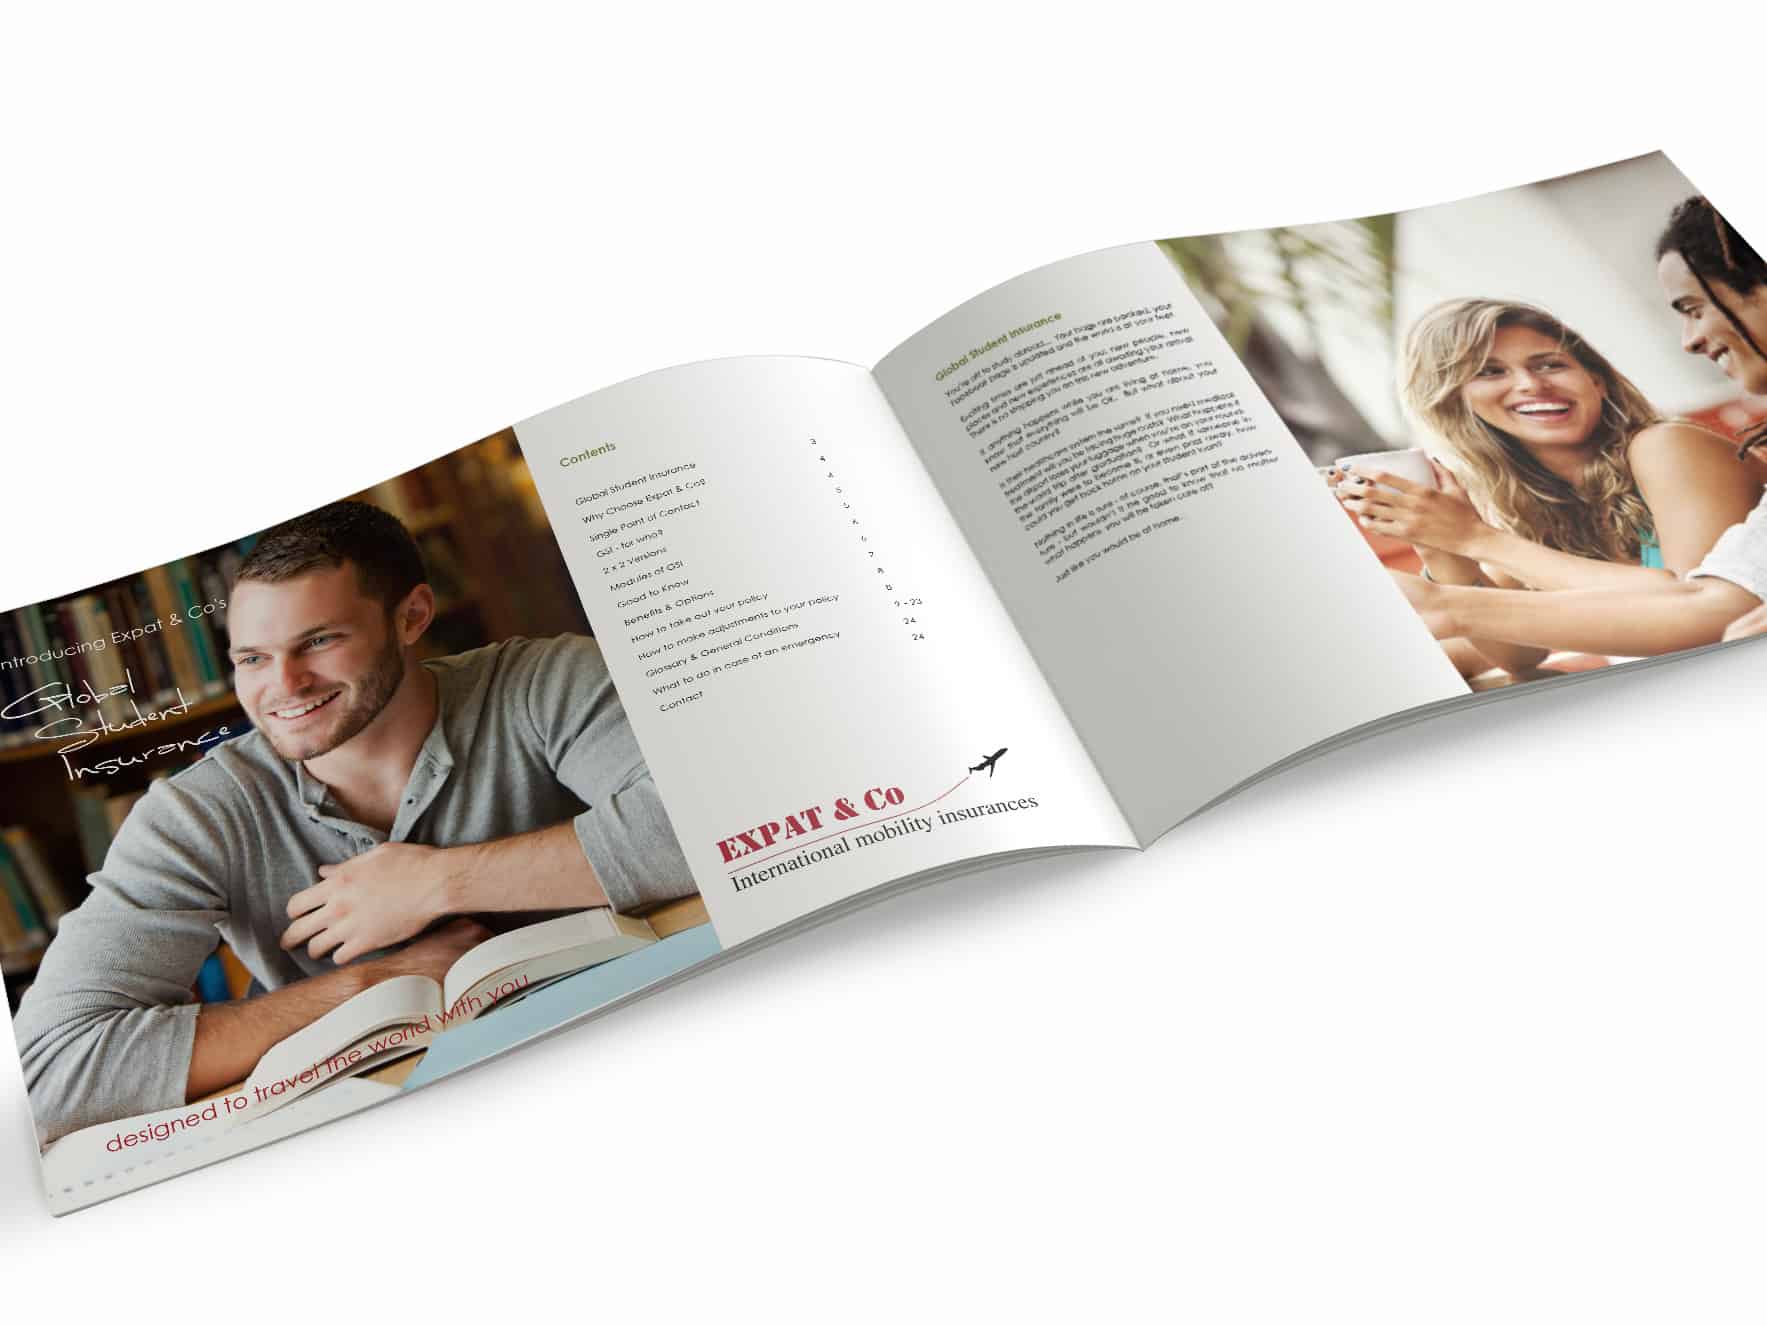 Brochure Design for Expat & Co global mobility insurance